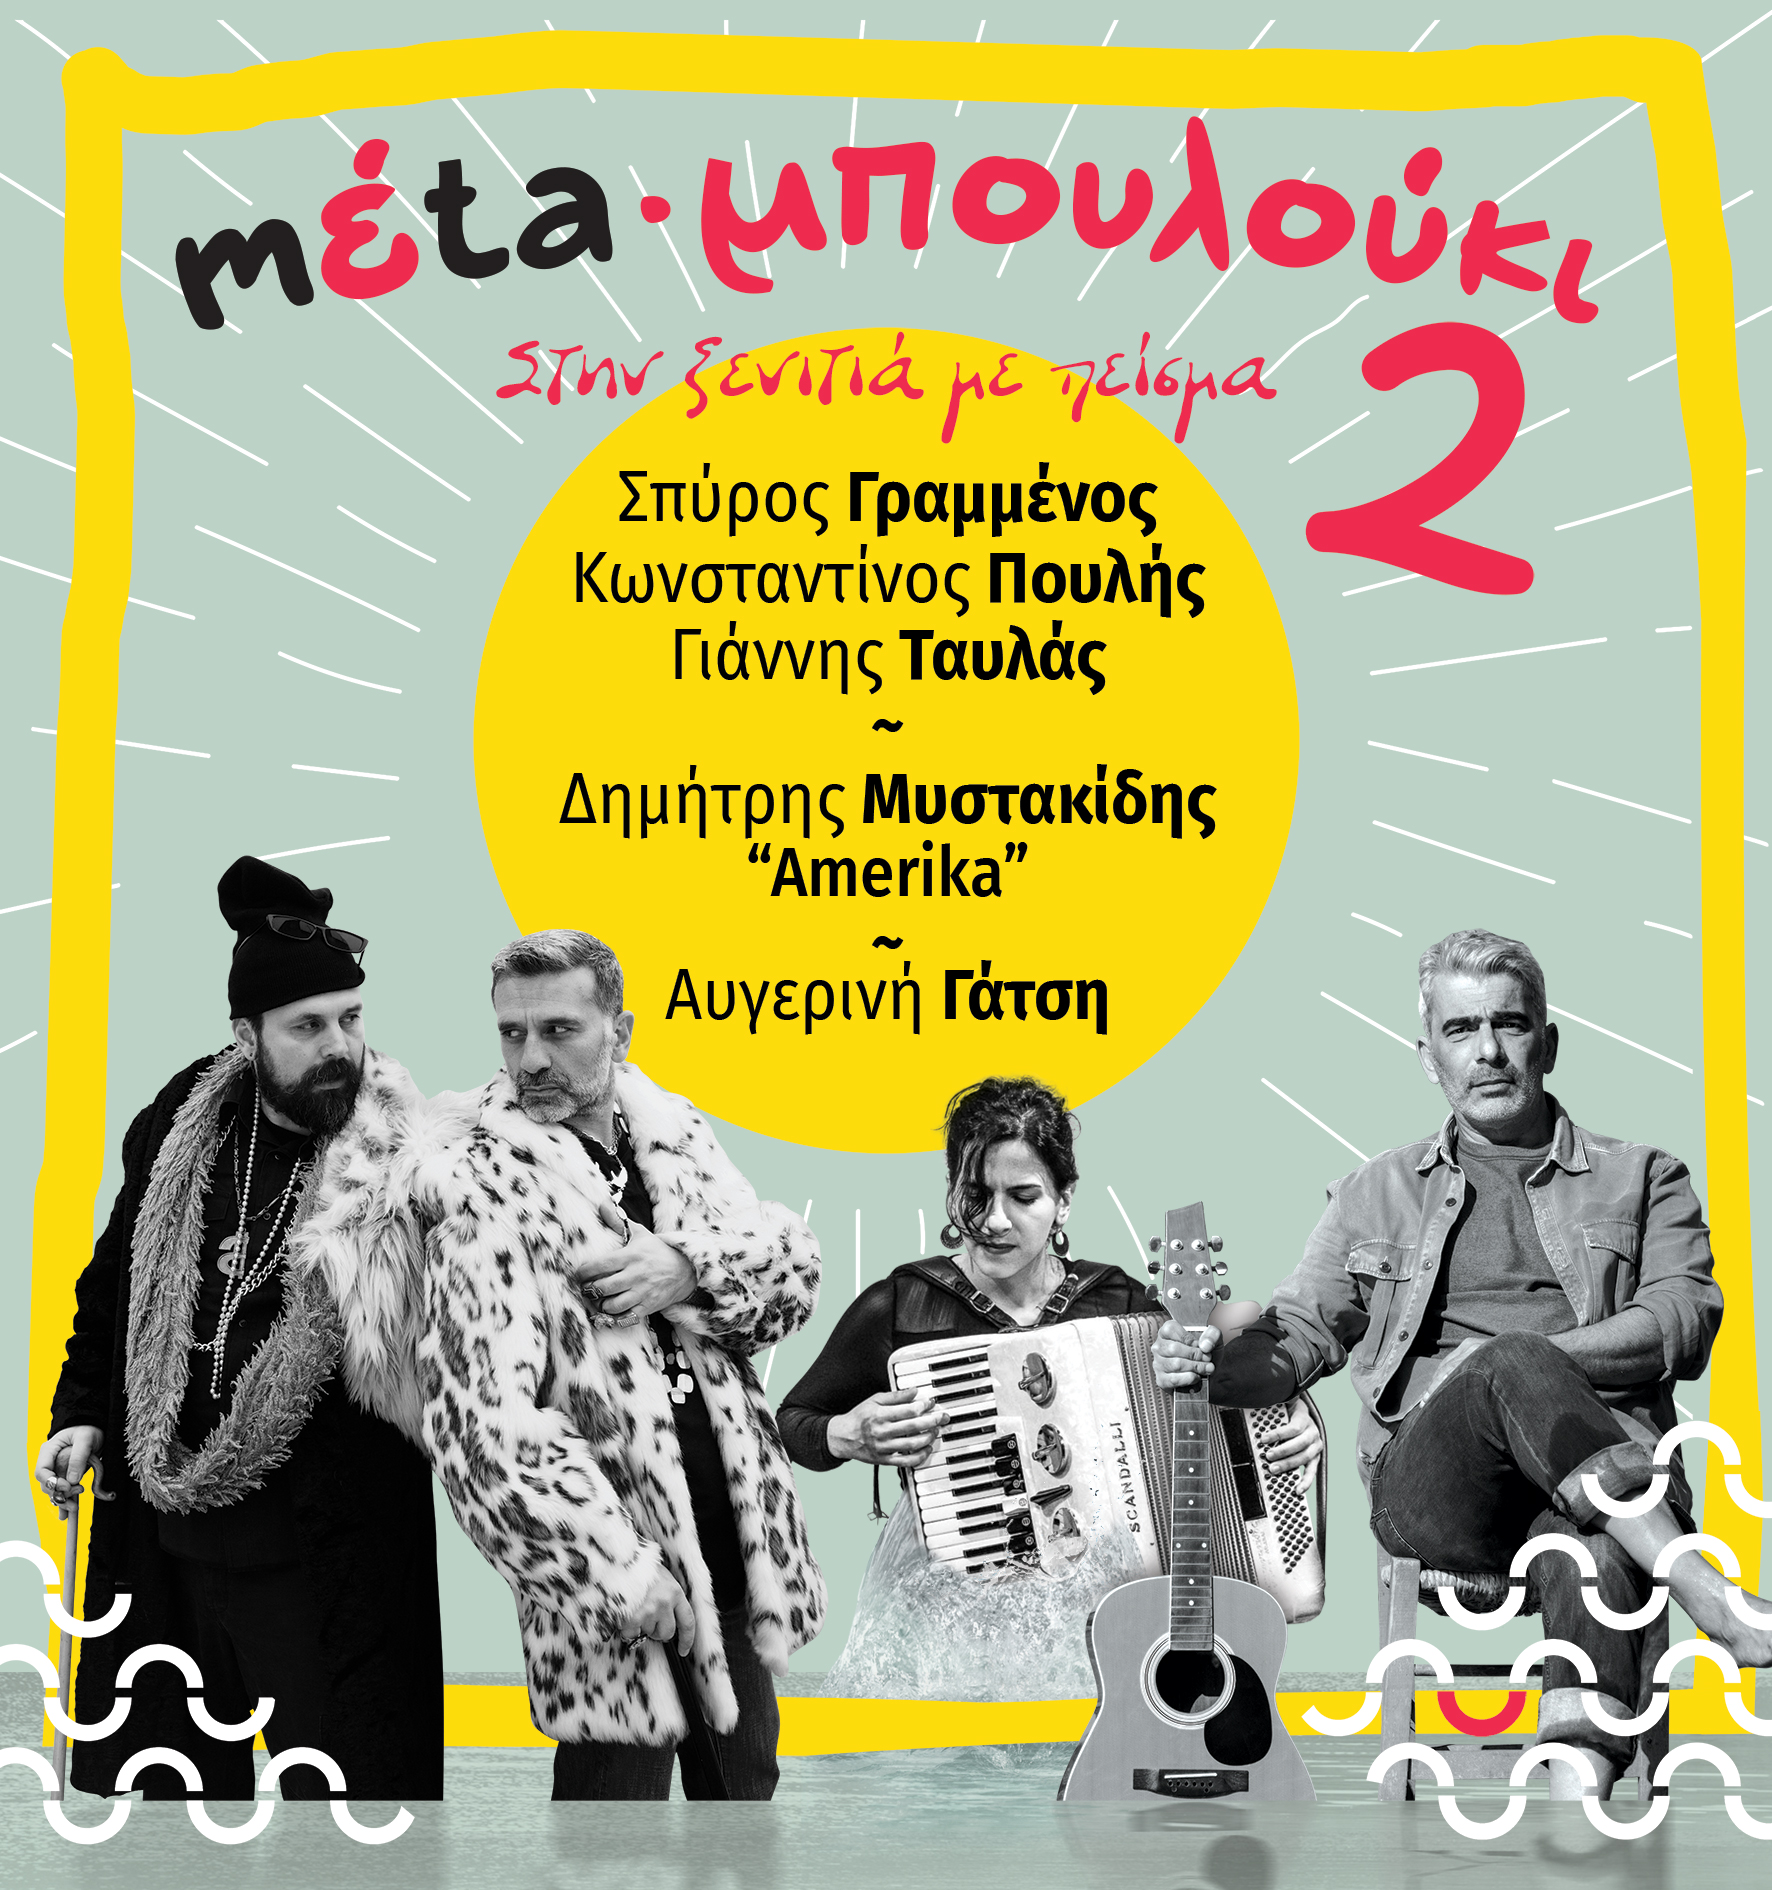 mέta-μπουλούκι 0.2 || «Στην ξενιτιά με πείσμα» Τετάρτη, 15 Ιουνίου 2022 @ Κηποθέατρο Αλκαζάρ